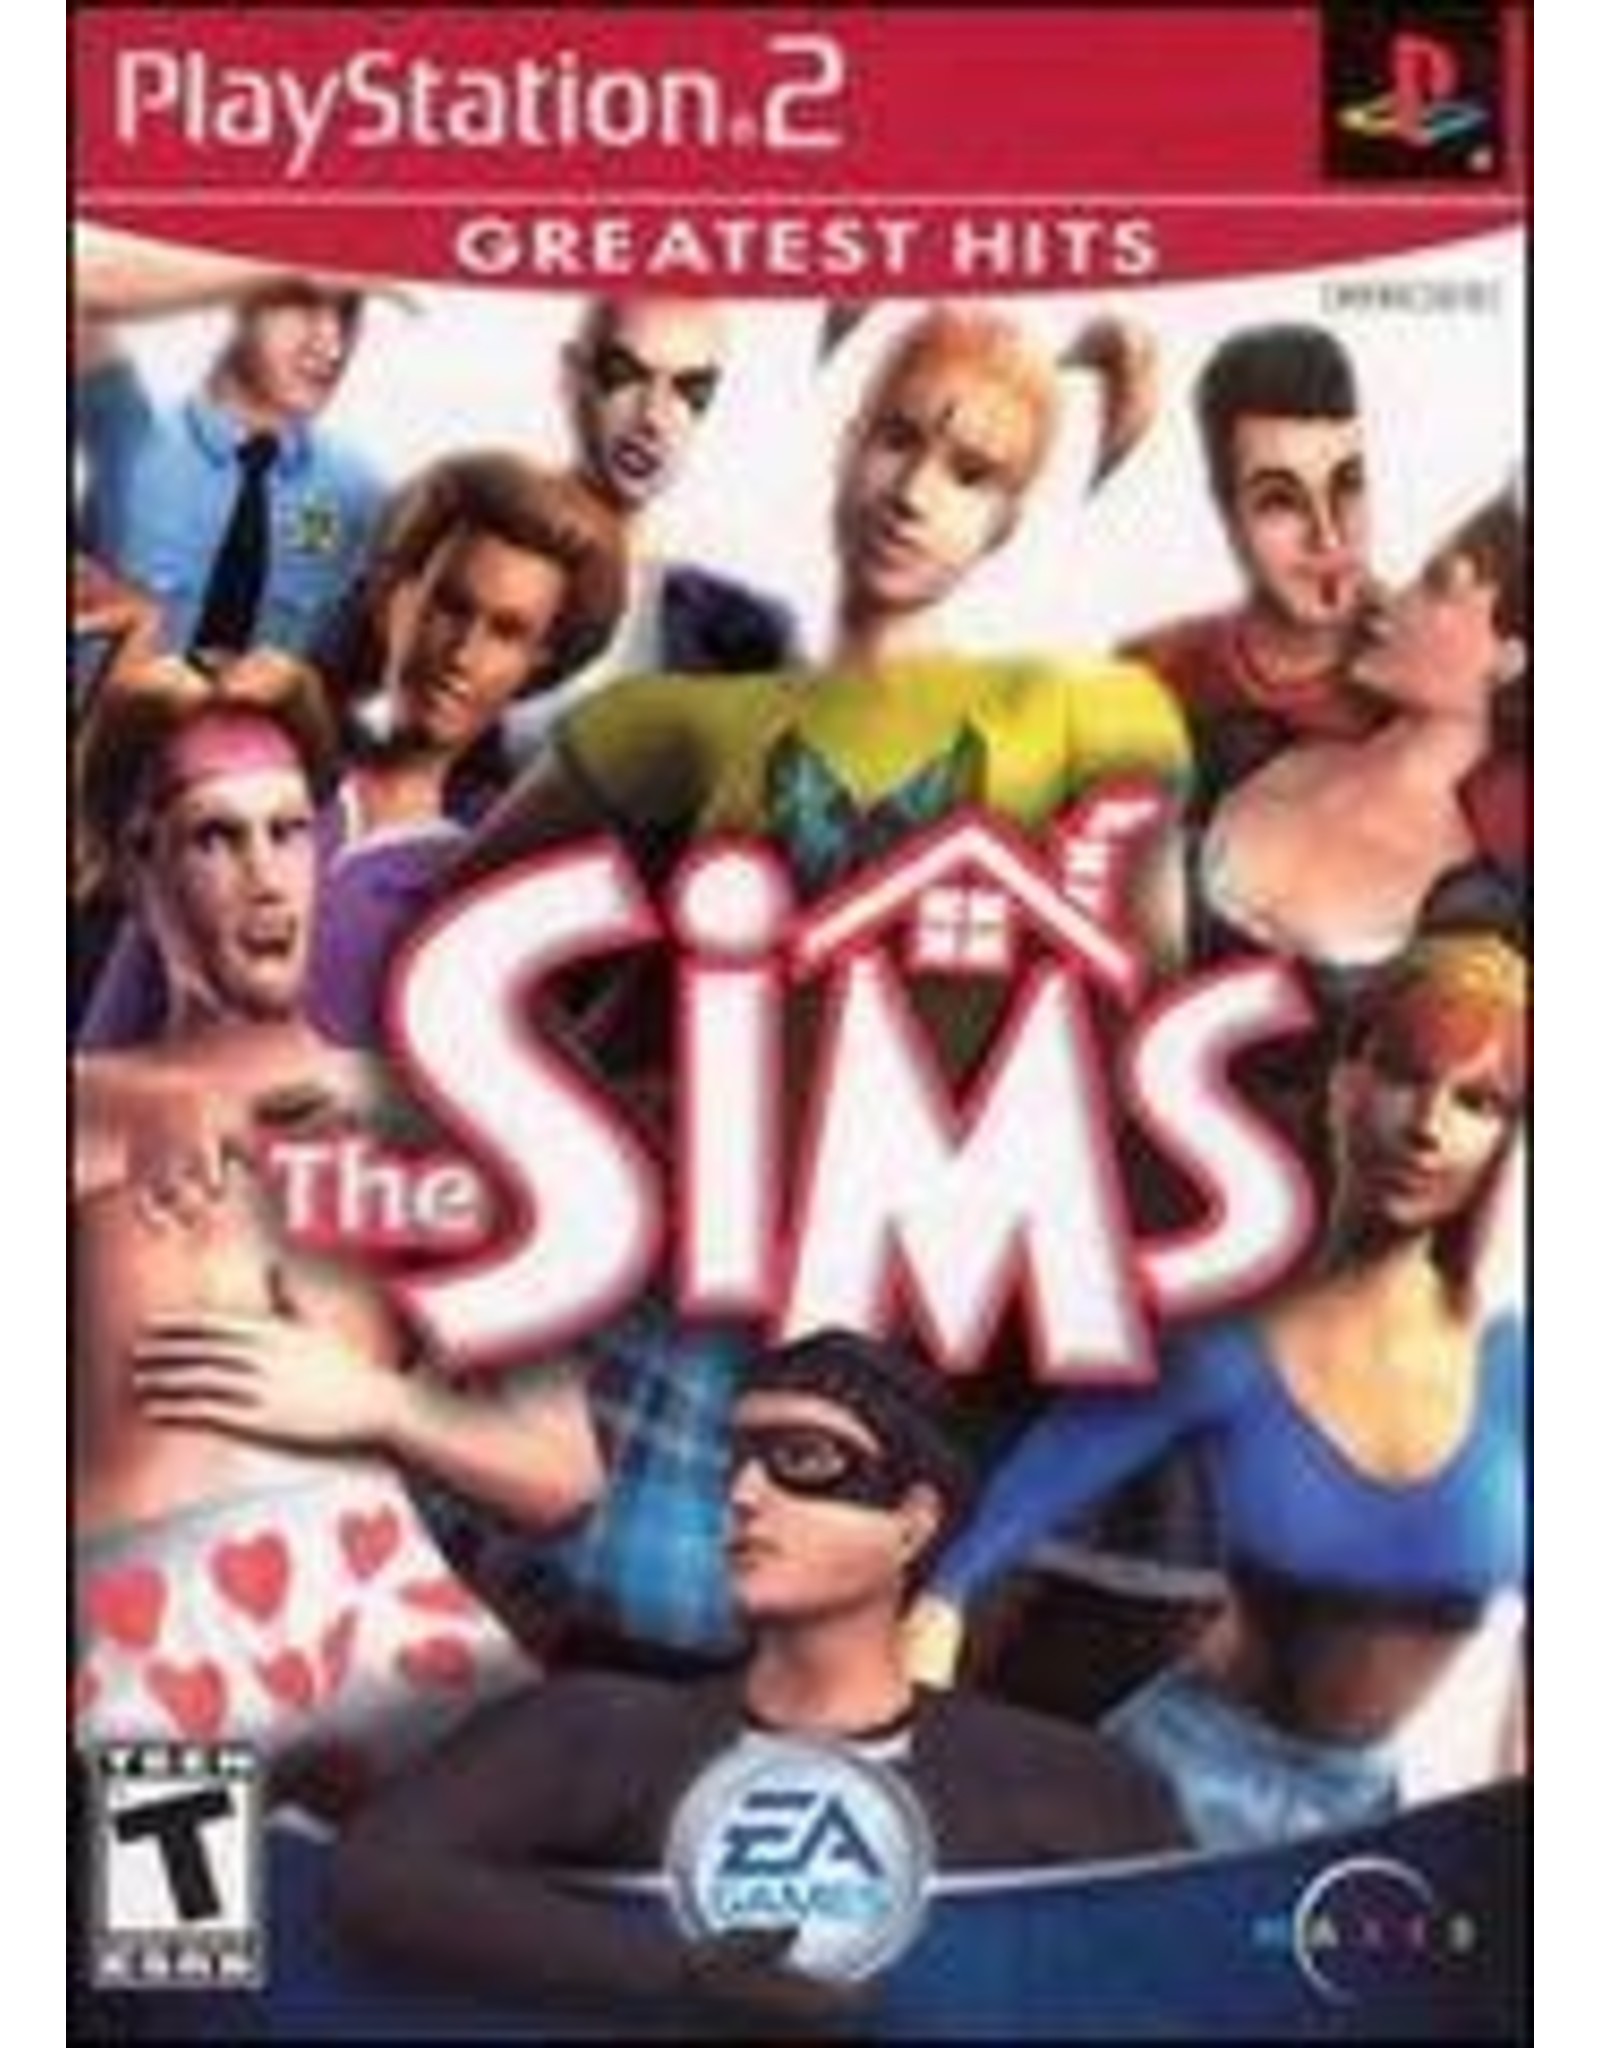 Playstation 2 Sims, The (Greatest Hits, CiB)